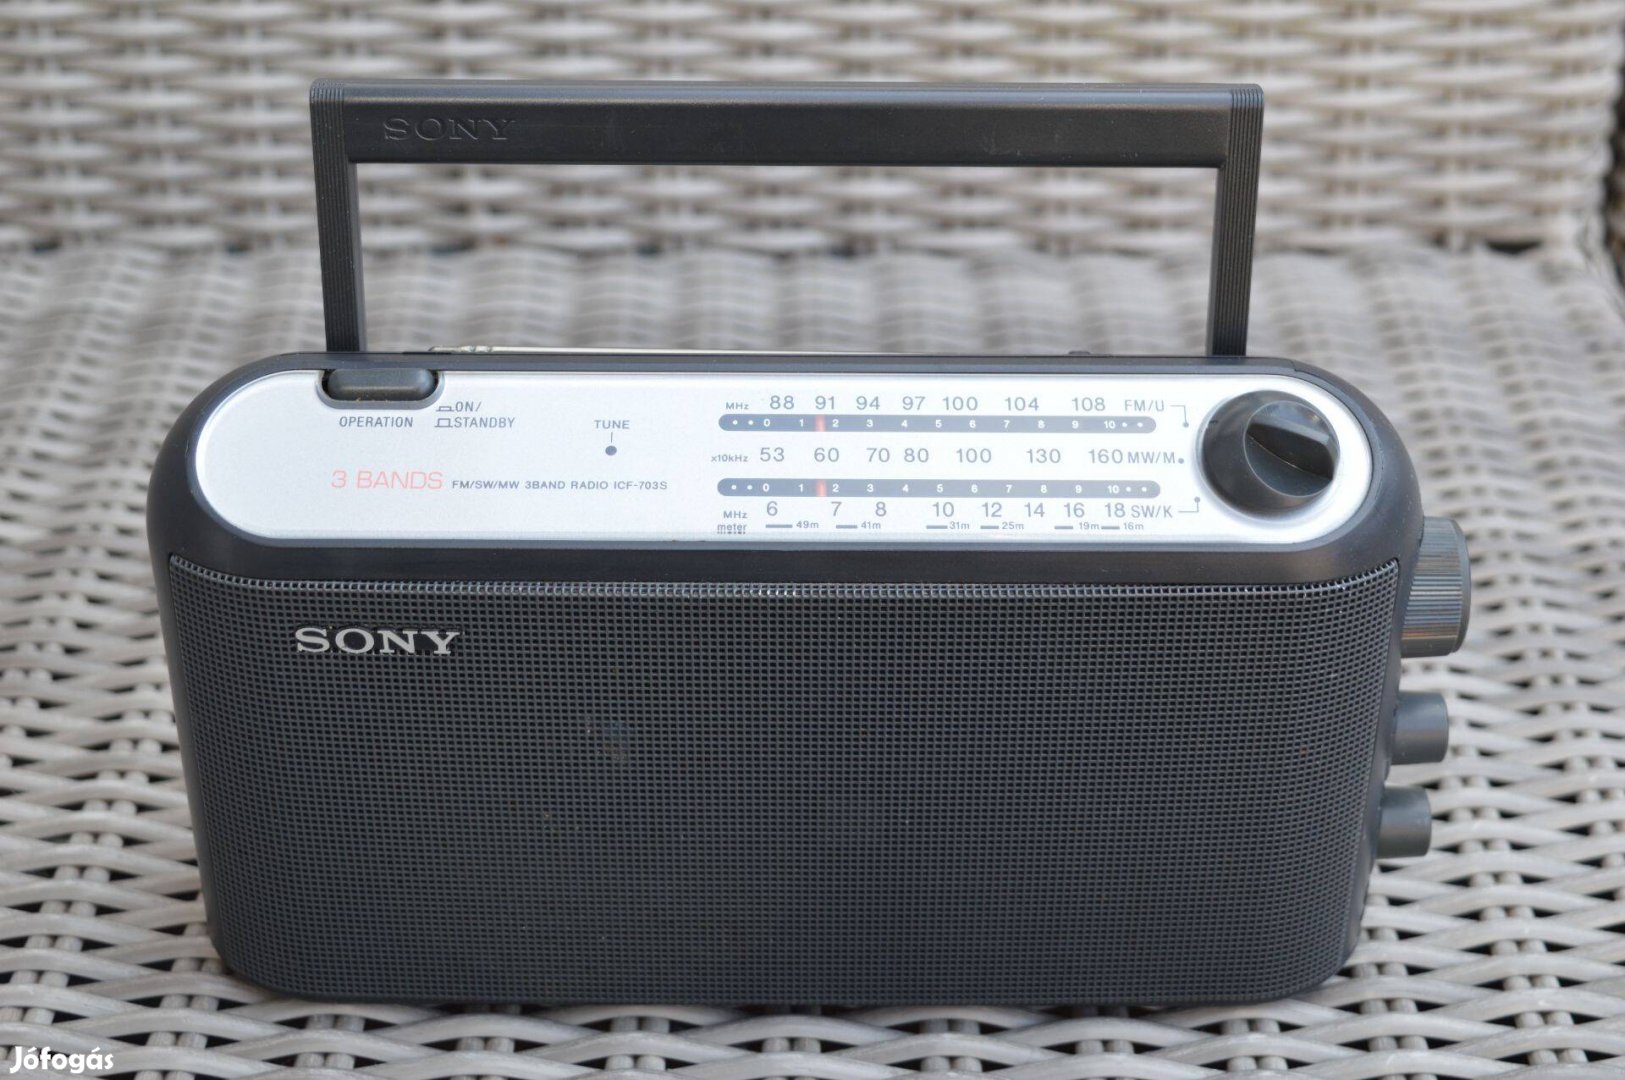 Vintage Sony ICF-703S rádió